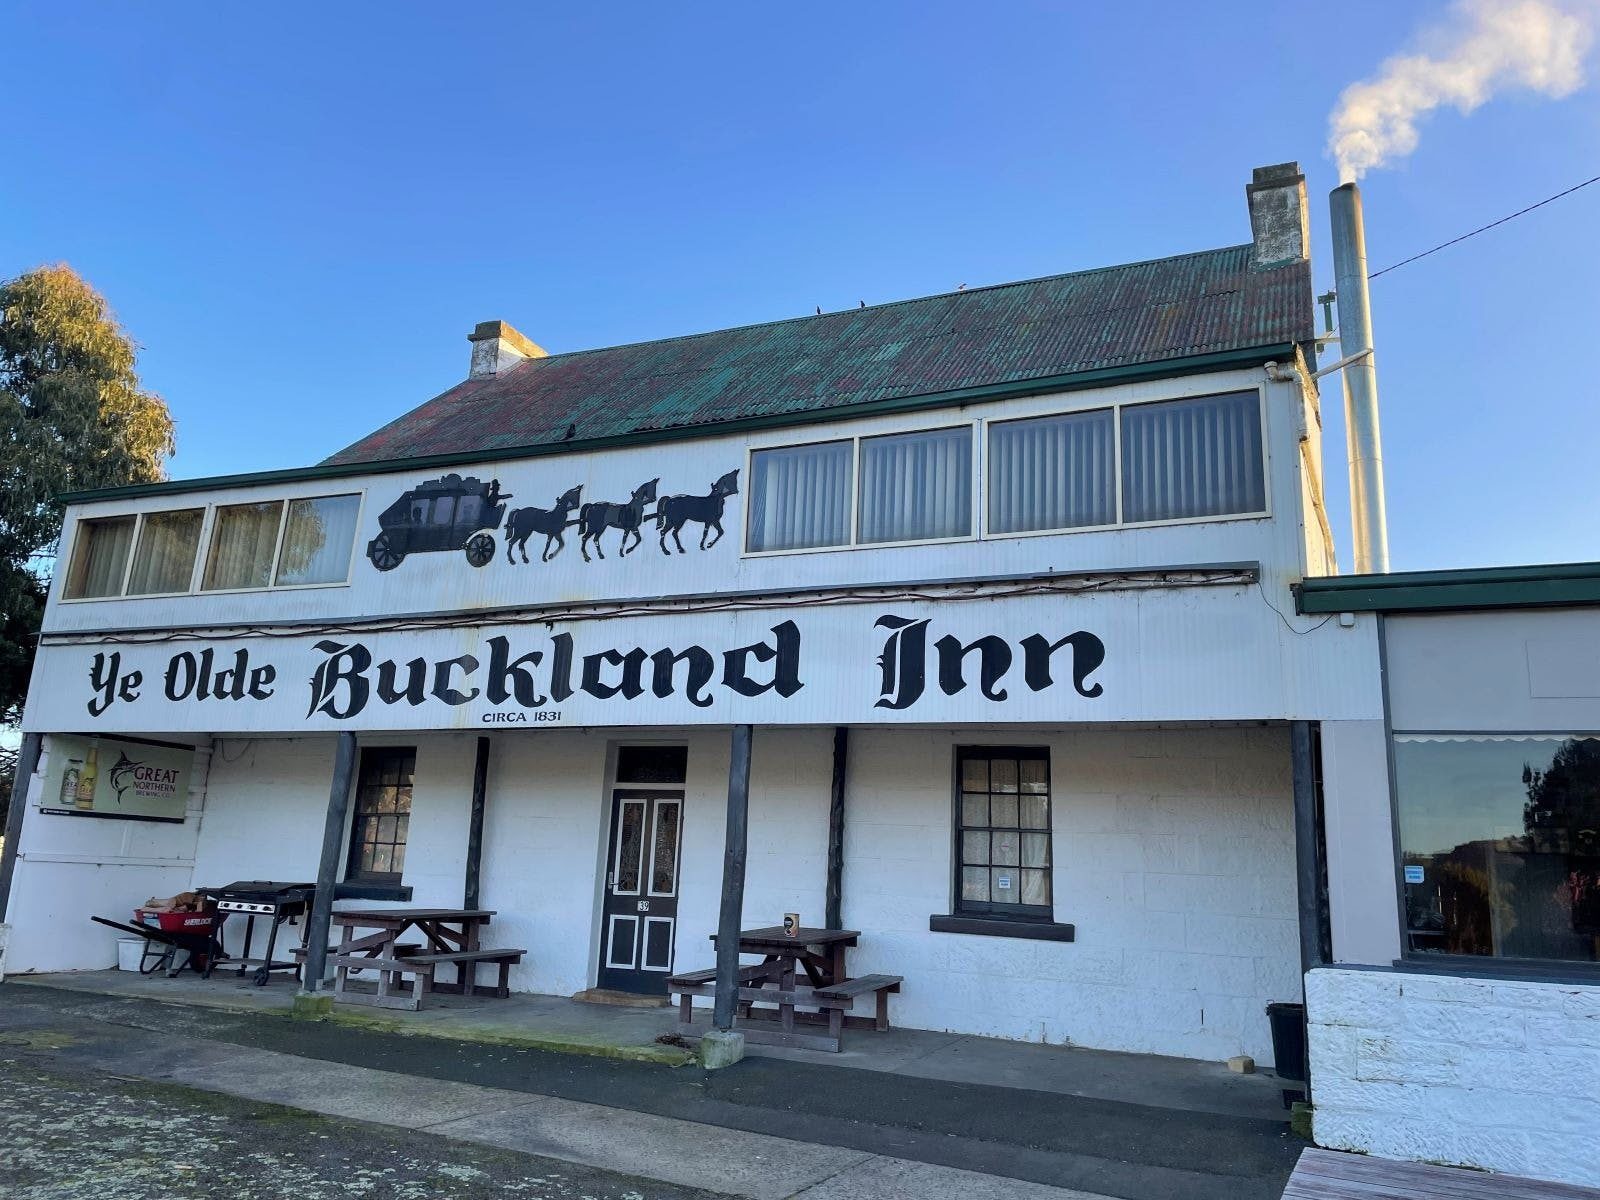 Present day Buckland Inn